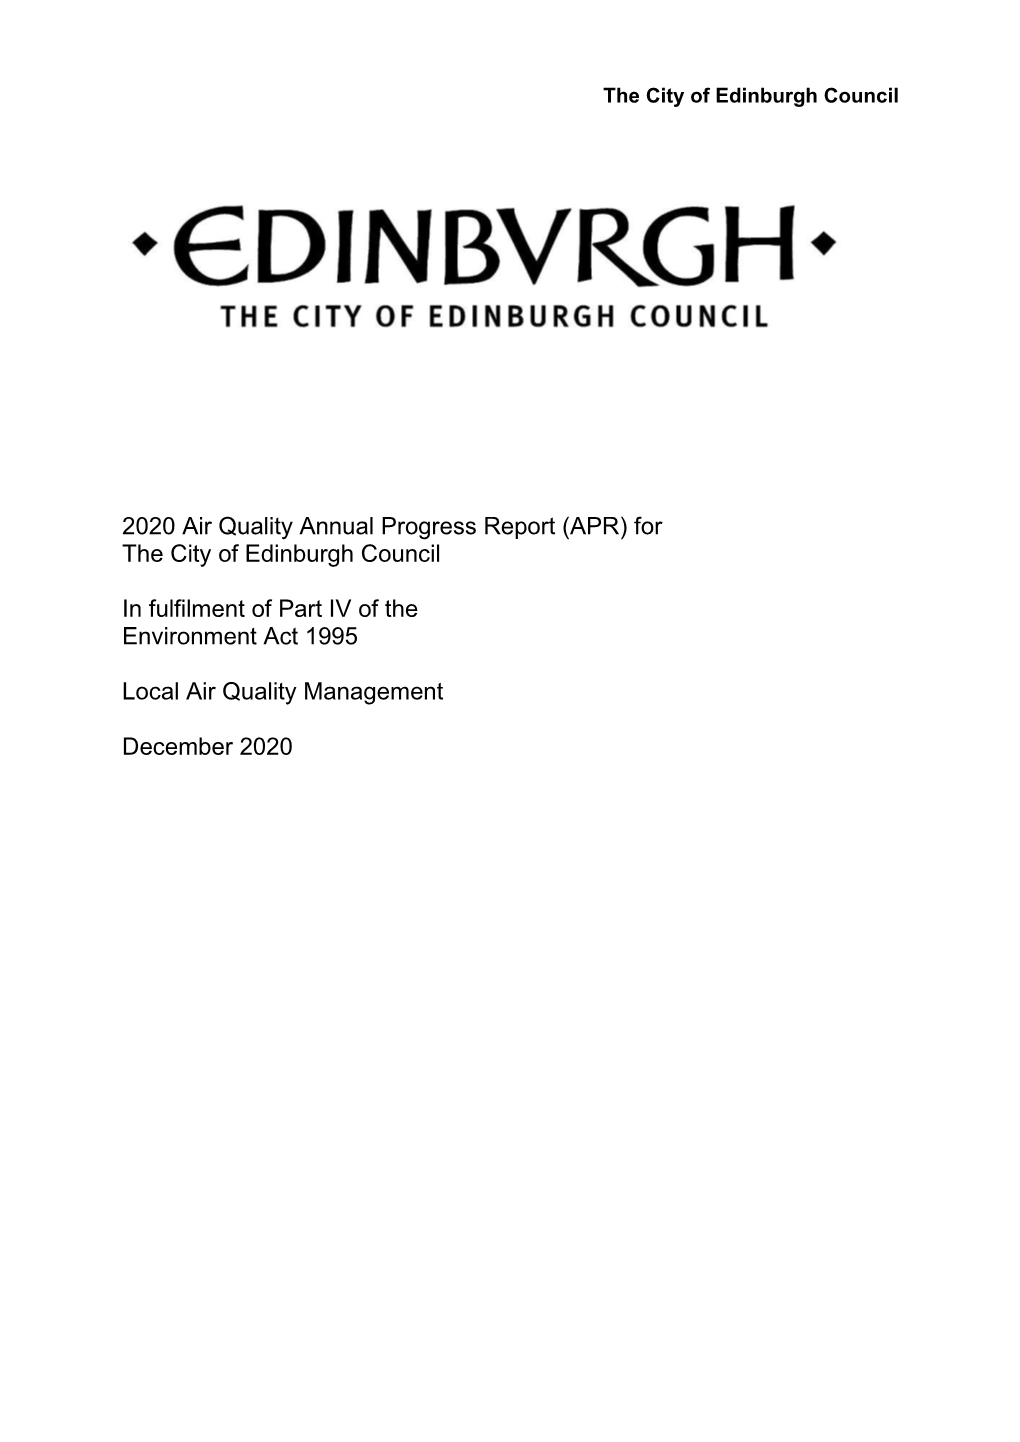 2020 Air Quality Annual Progress Report (APR) for the City of Edinburgh Council